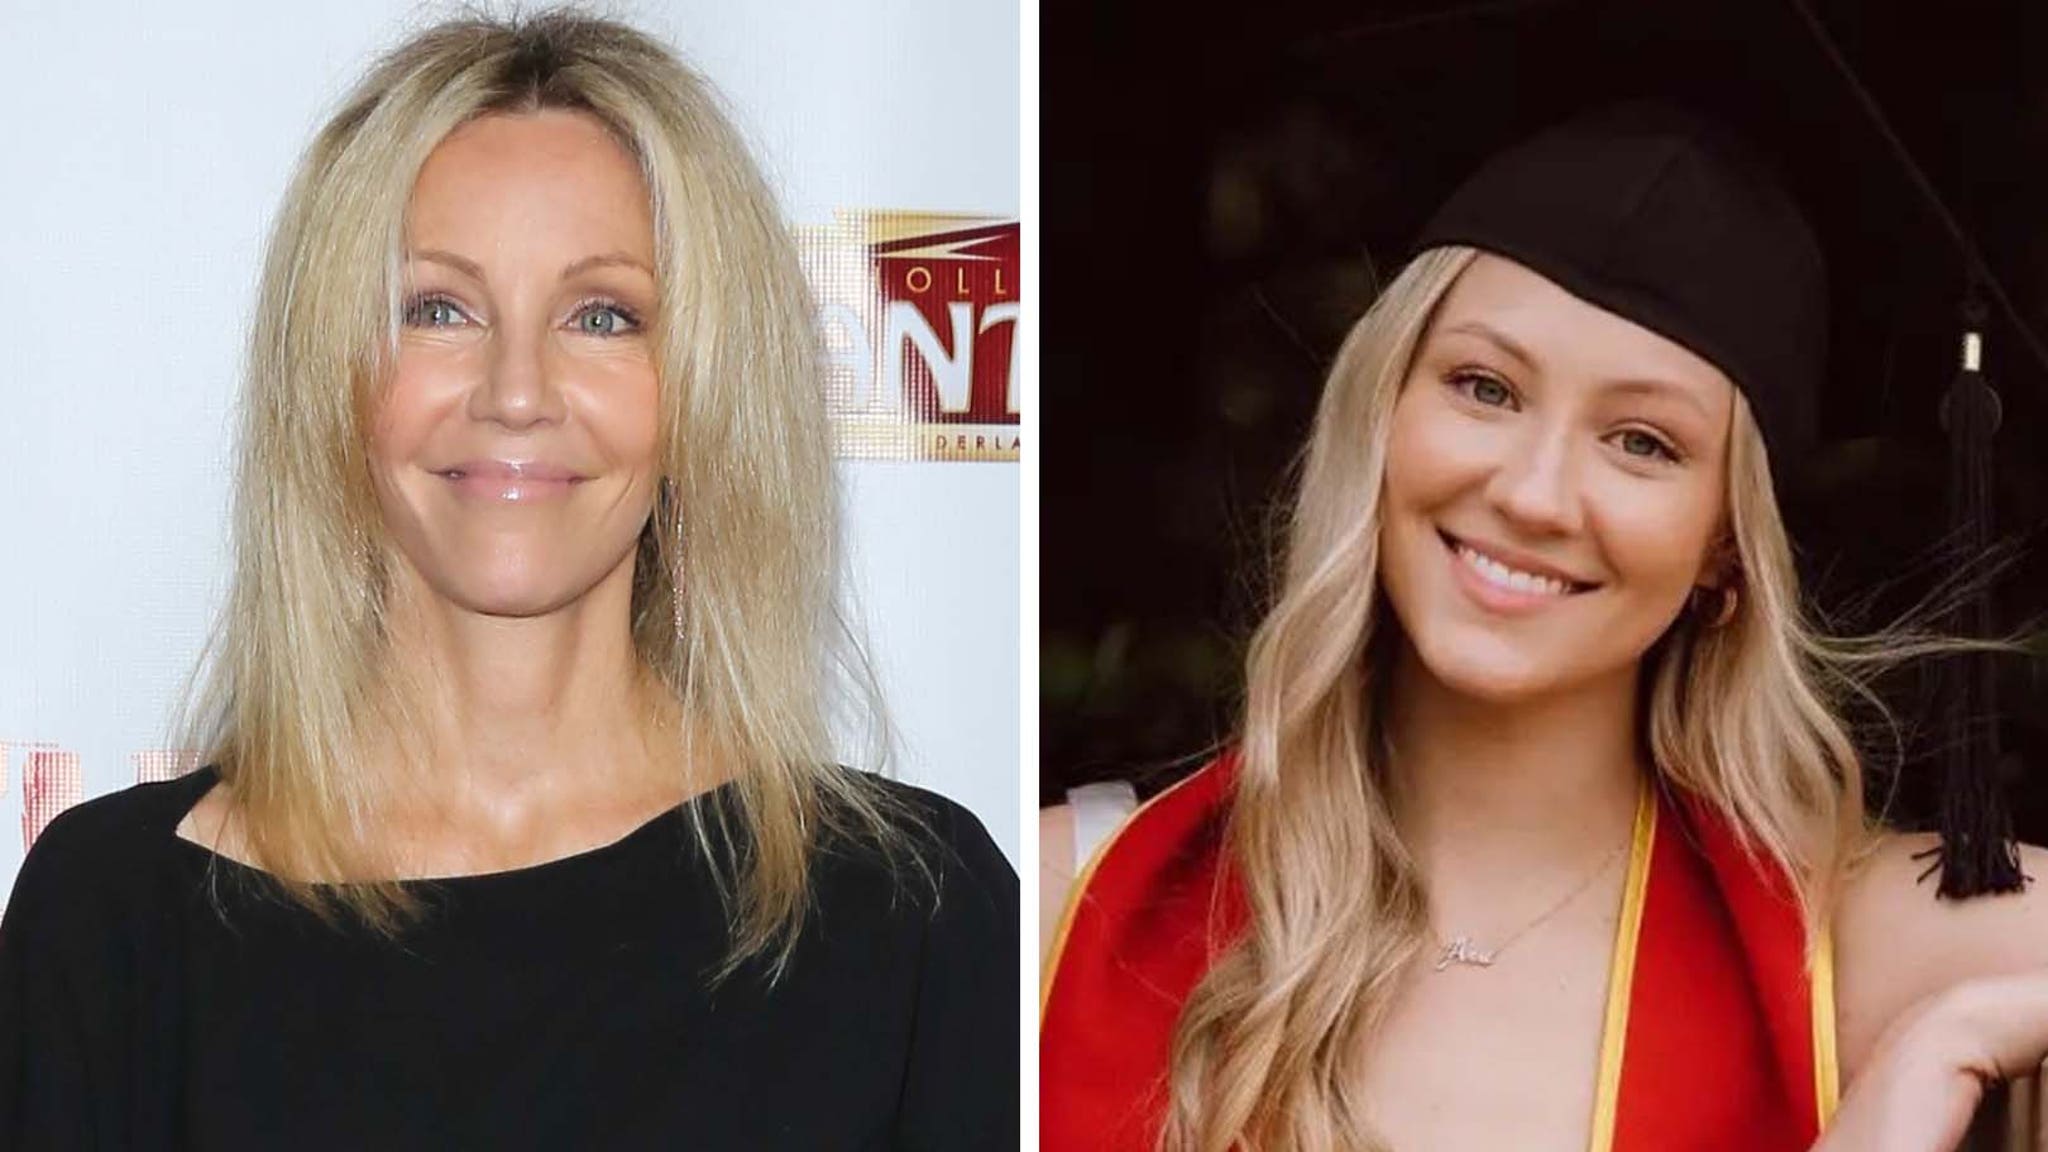 Heather Locklear's Daughter Ava Sambora Graduates With Master's from USC